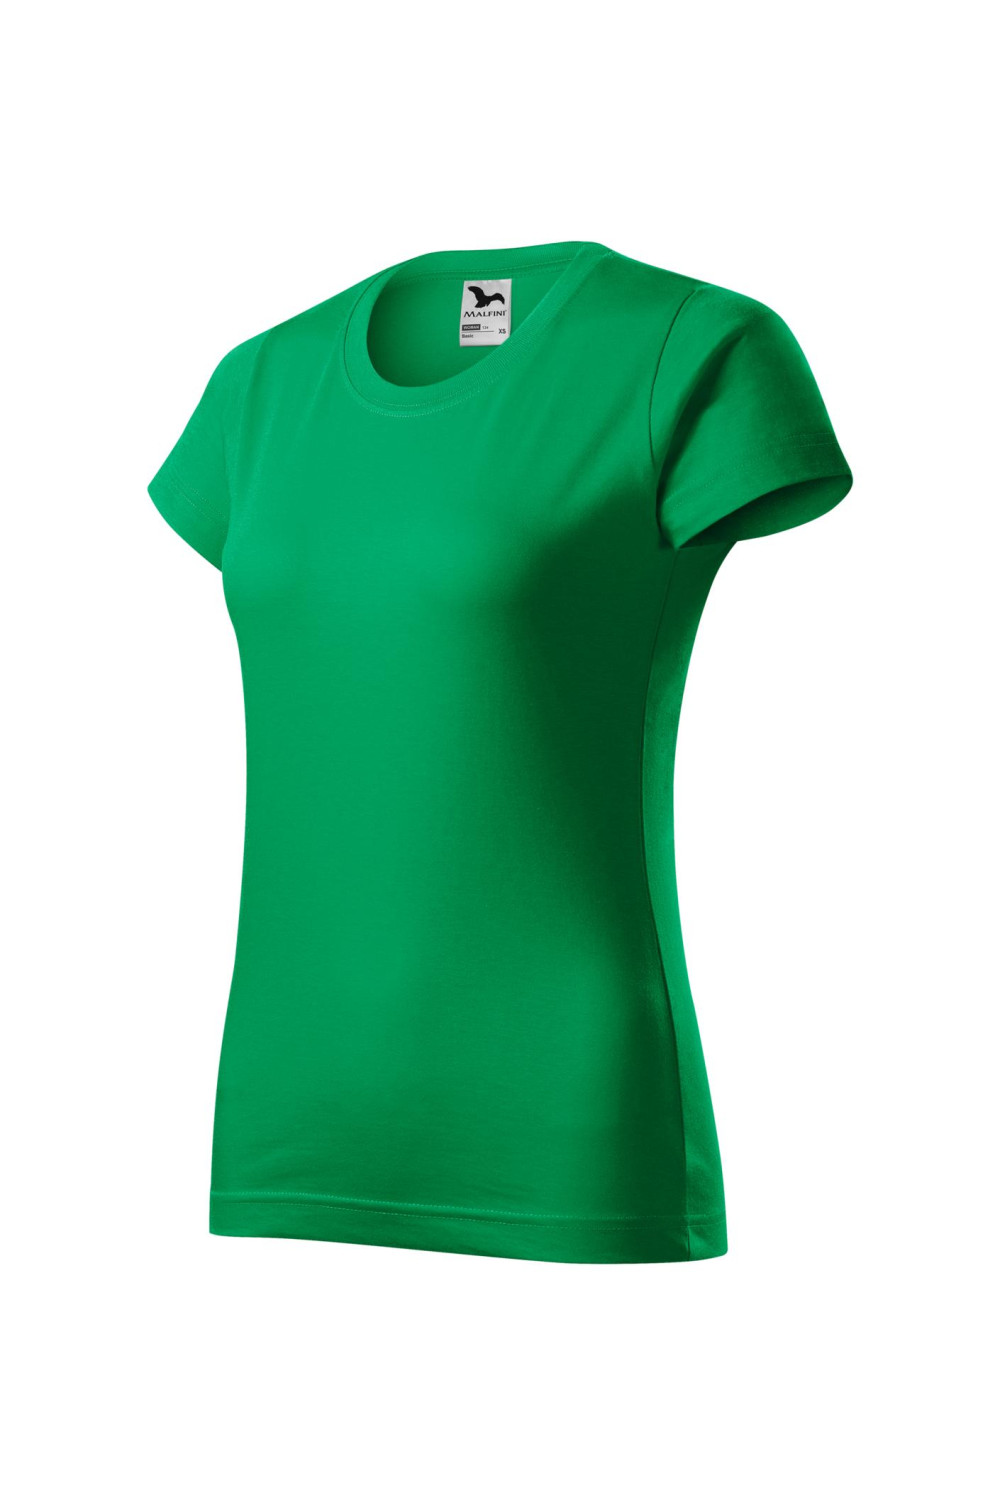 BASIC 134 MALFINI Koszulka damska 100% bawełna t-shirt zieleń trawy